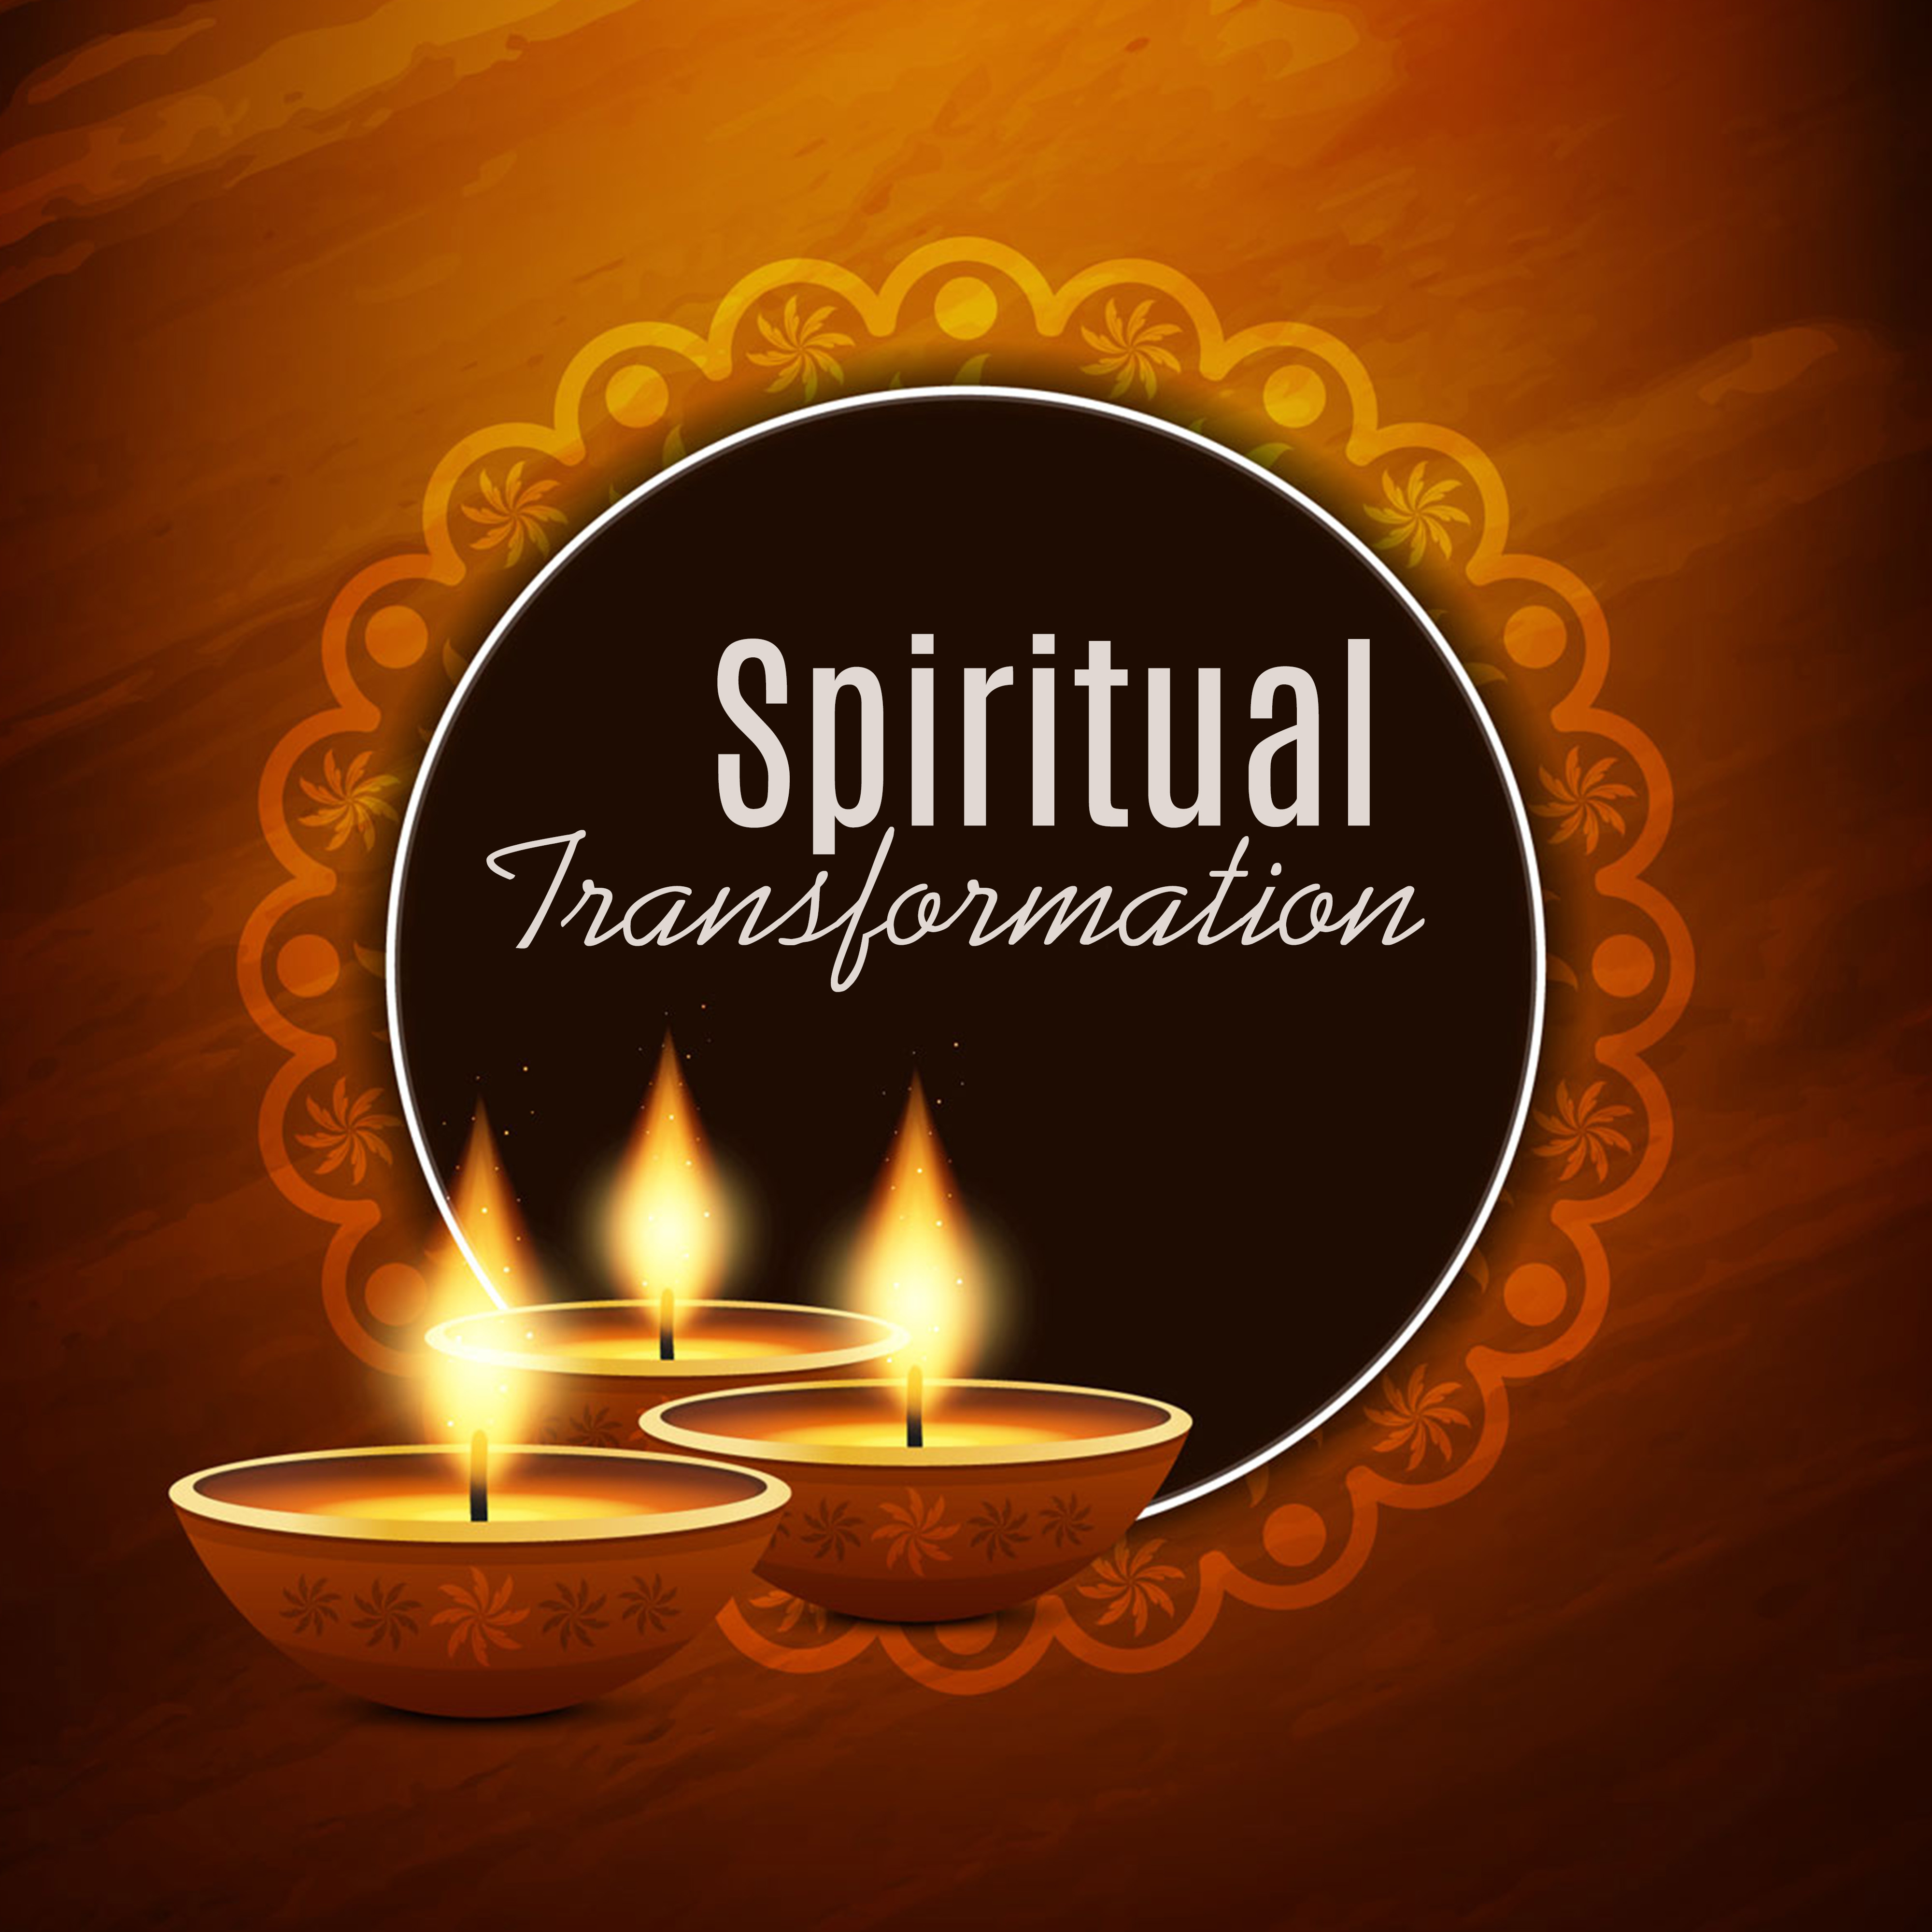 Spiritual Transformation: Music for Meditation and Contemplation